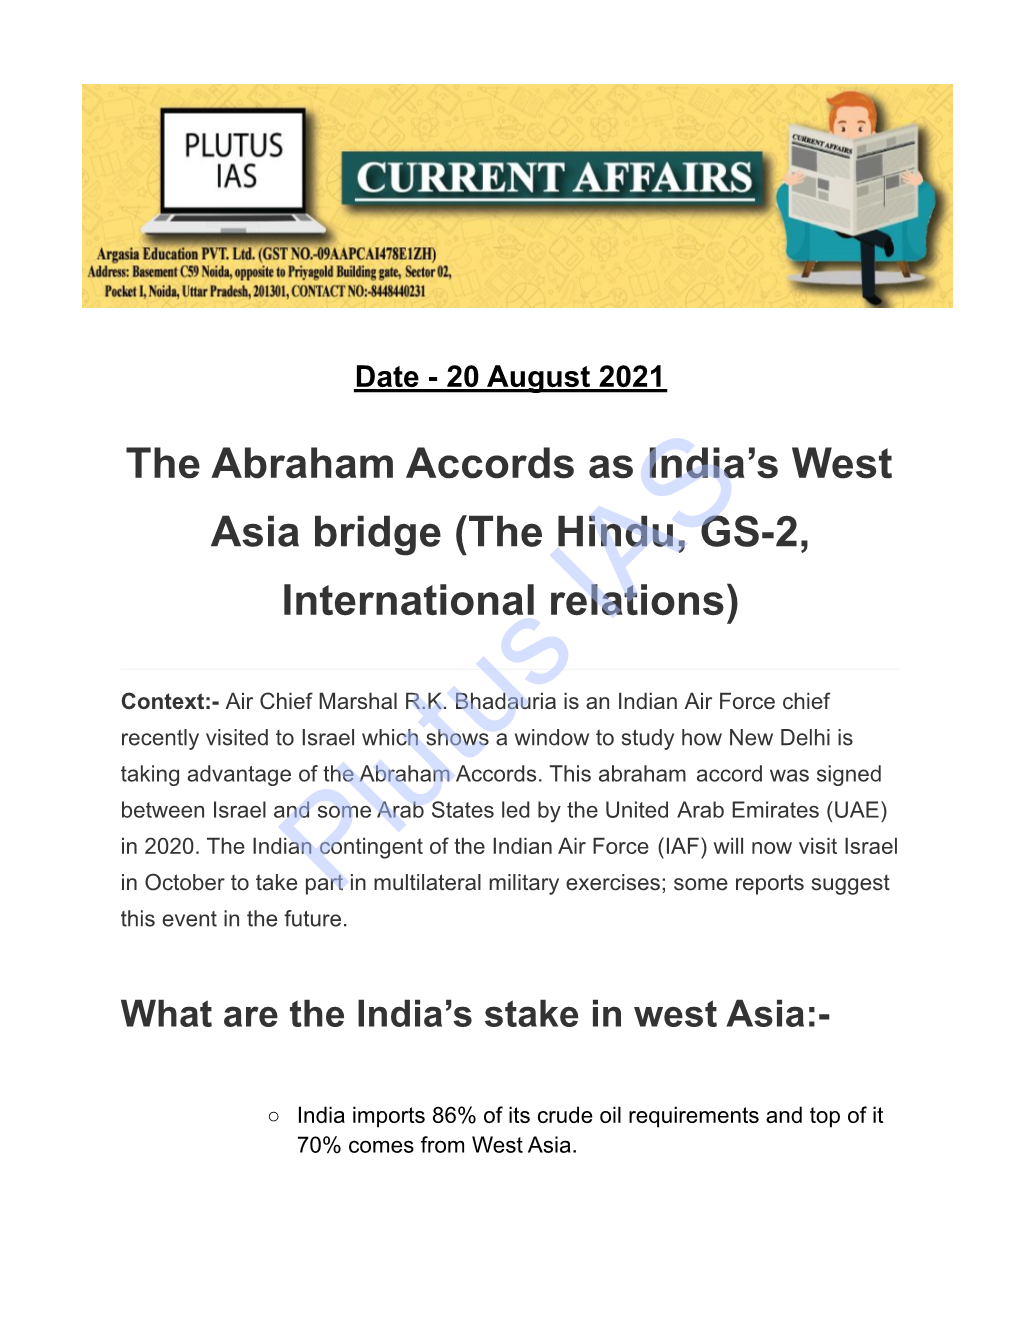 The Abraham Accords As India's West Asia Bridge